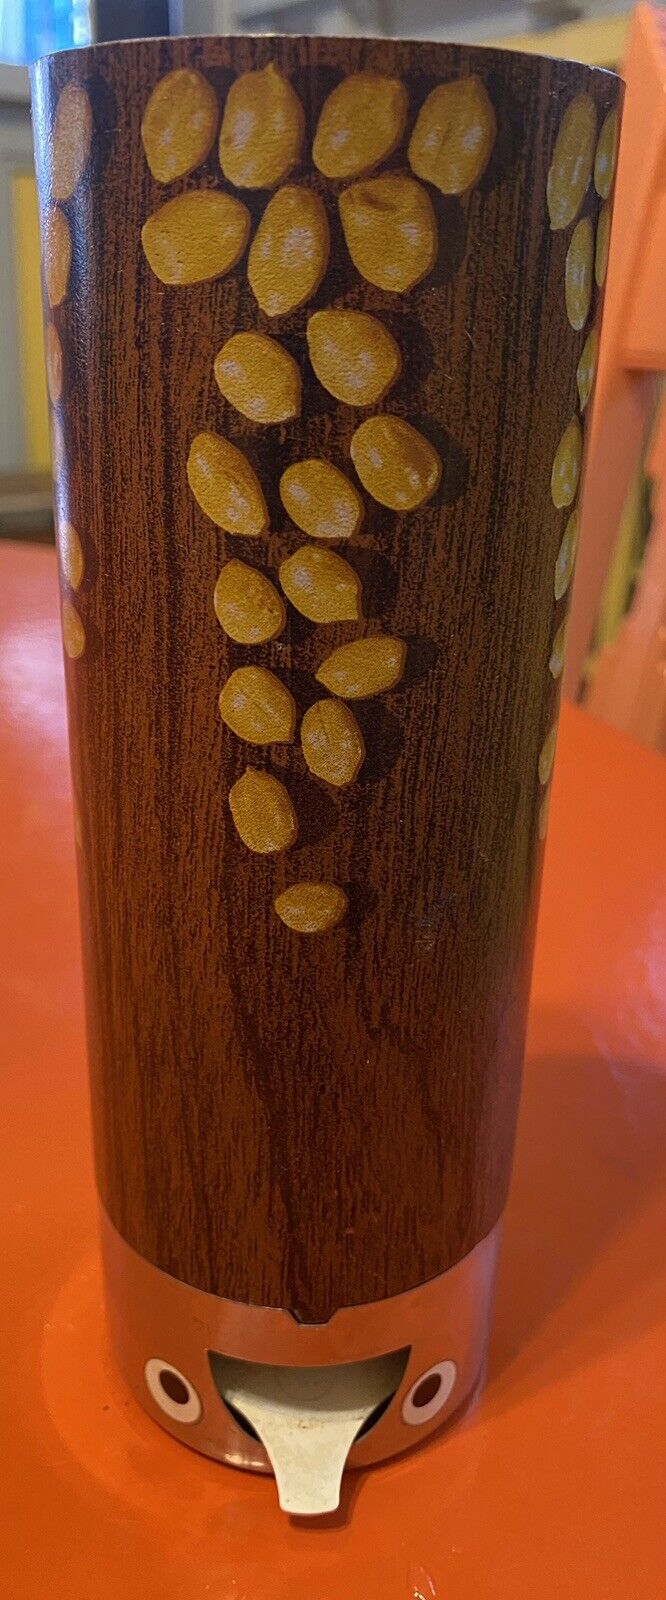 Vintage WMF (W. Germany) Wood Nut/Candy Dispenser, Bird Shaped. Works READ